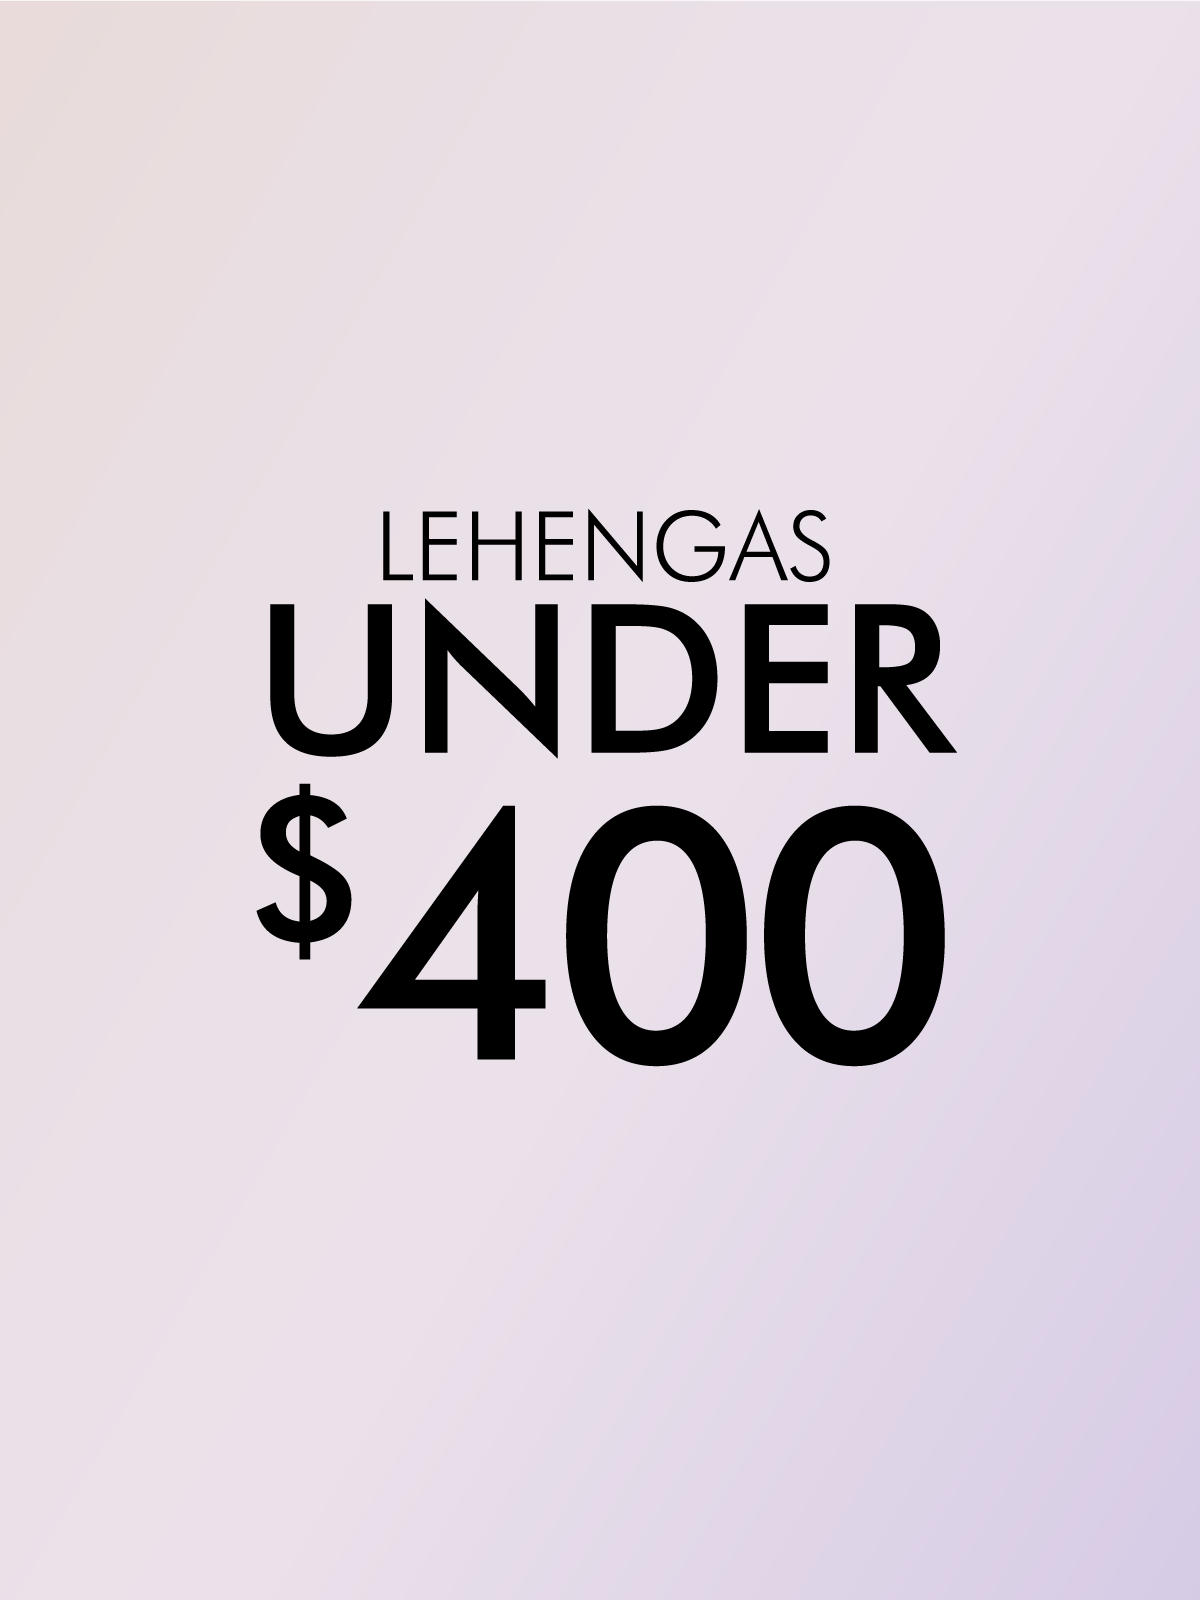 LEHENGAS UNDER $400